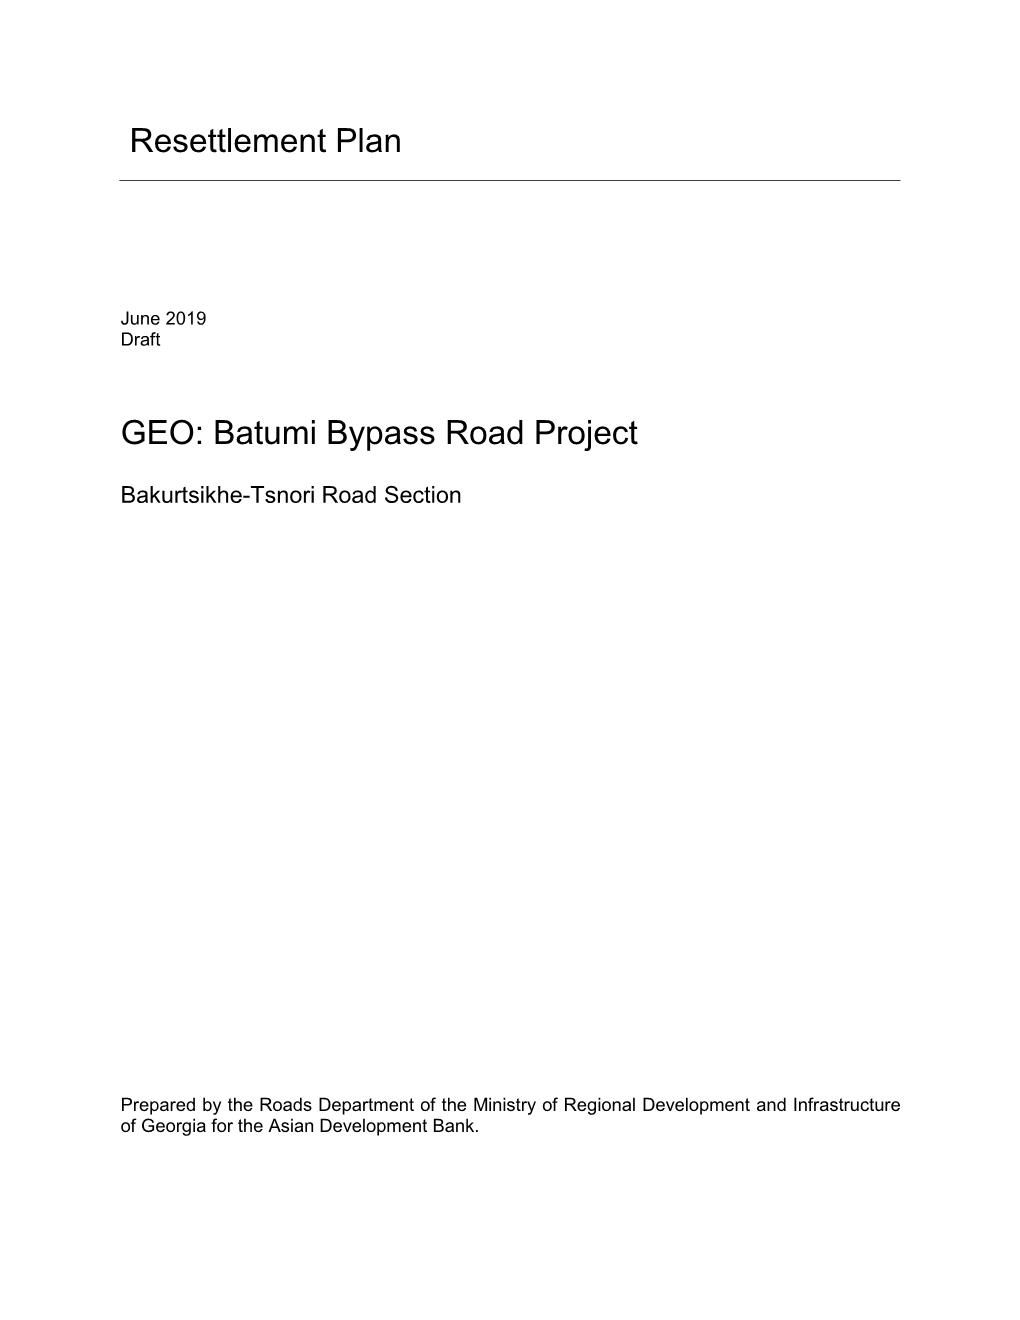 50064-001: Batumi Bypass Road Project